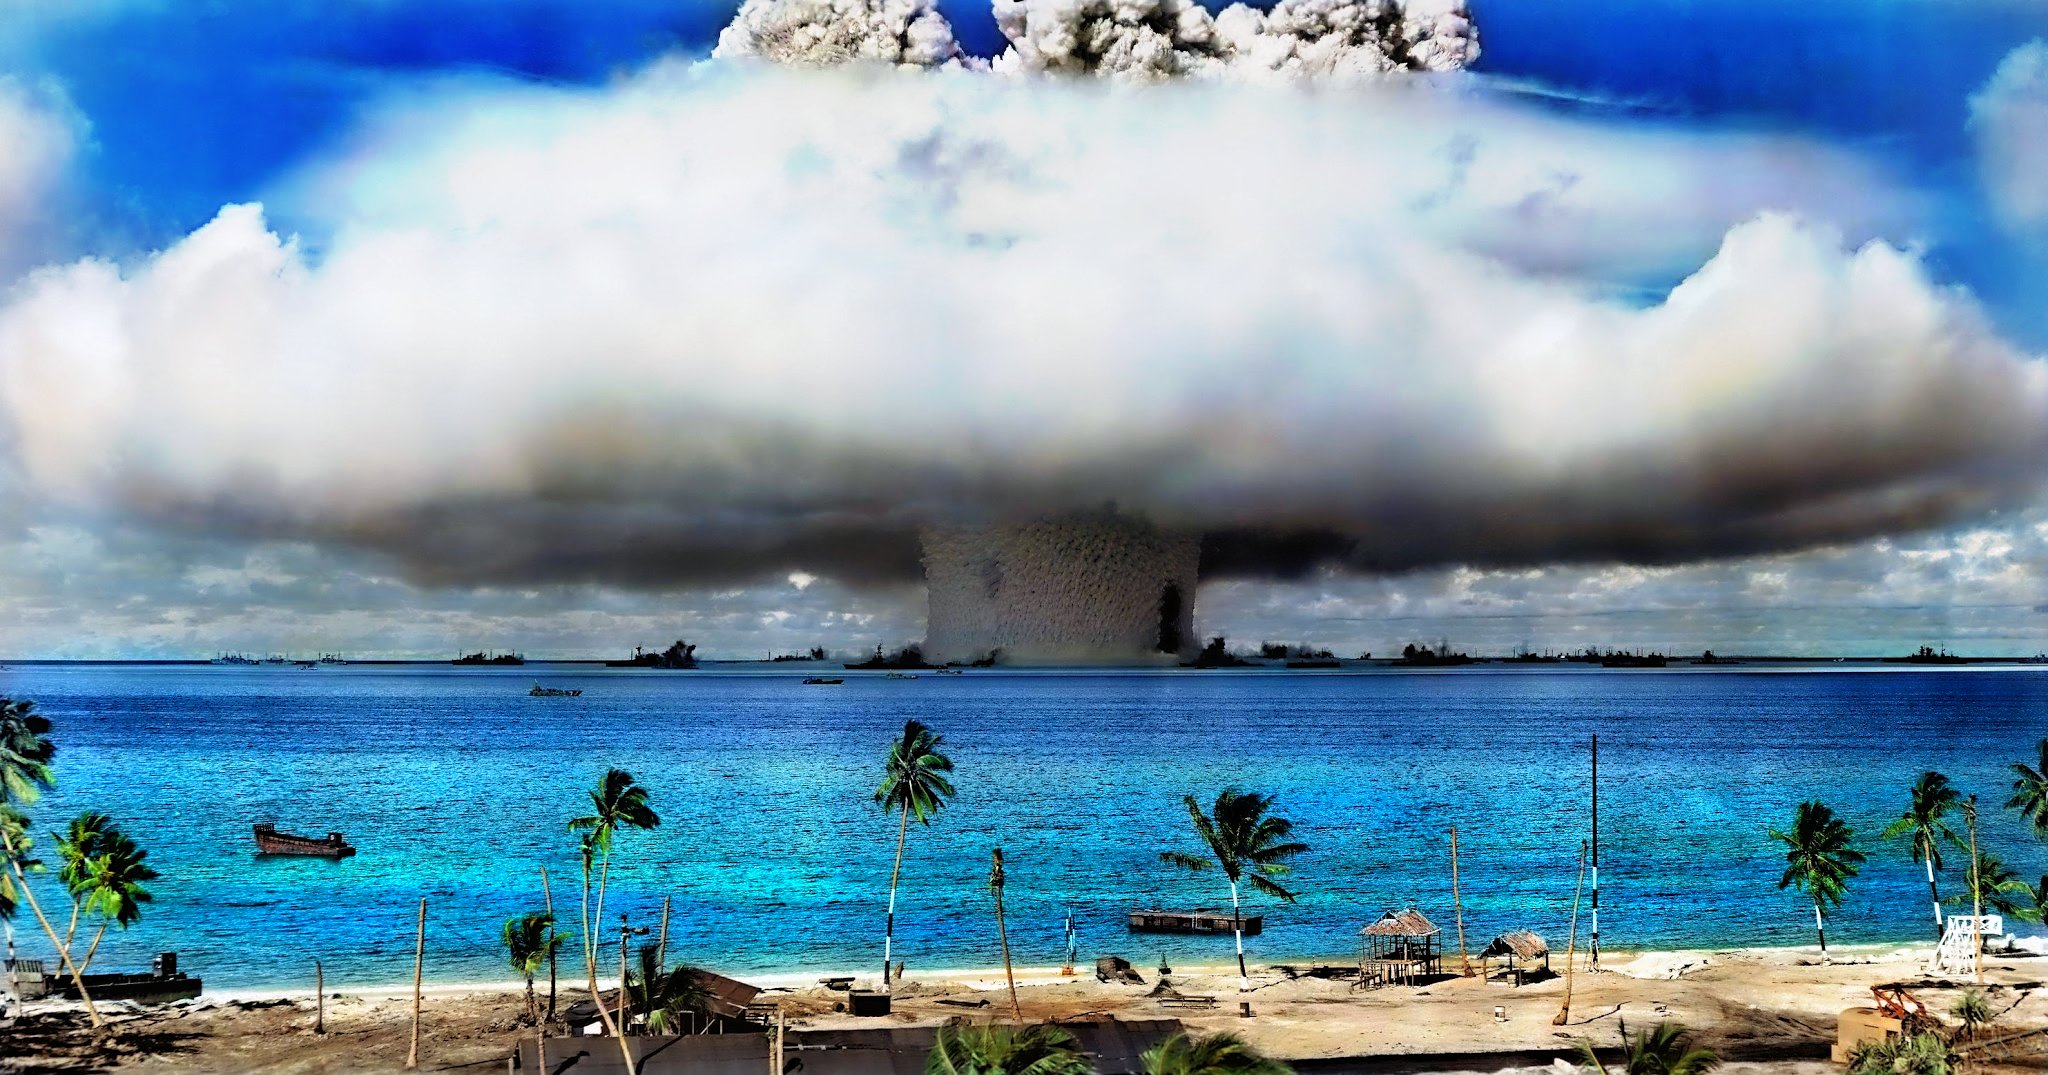 bomb, explosion, military, atoll